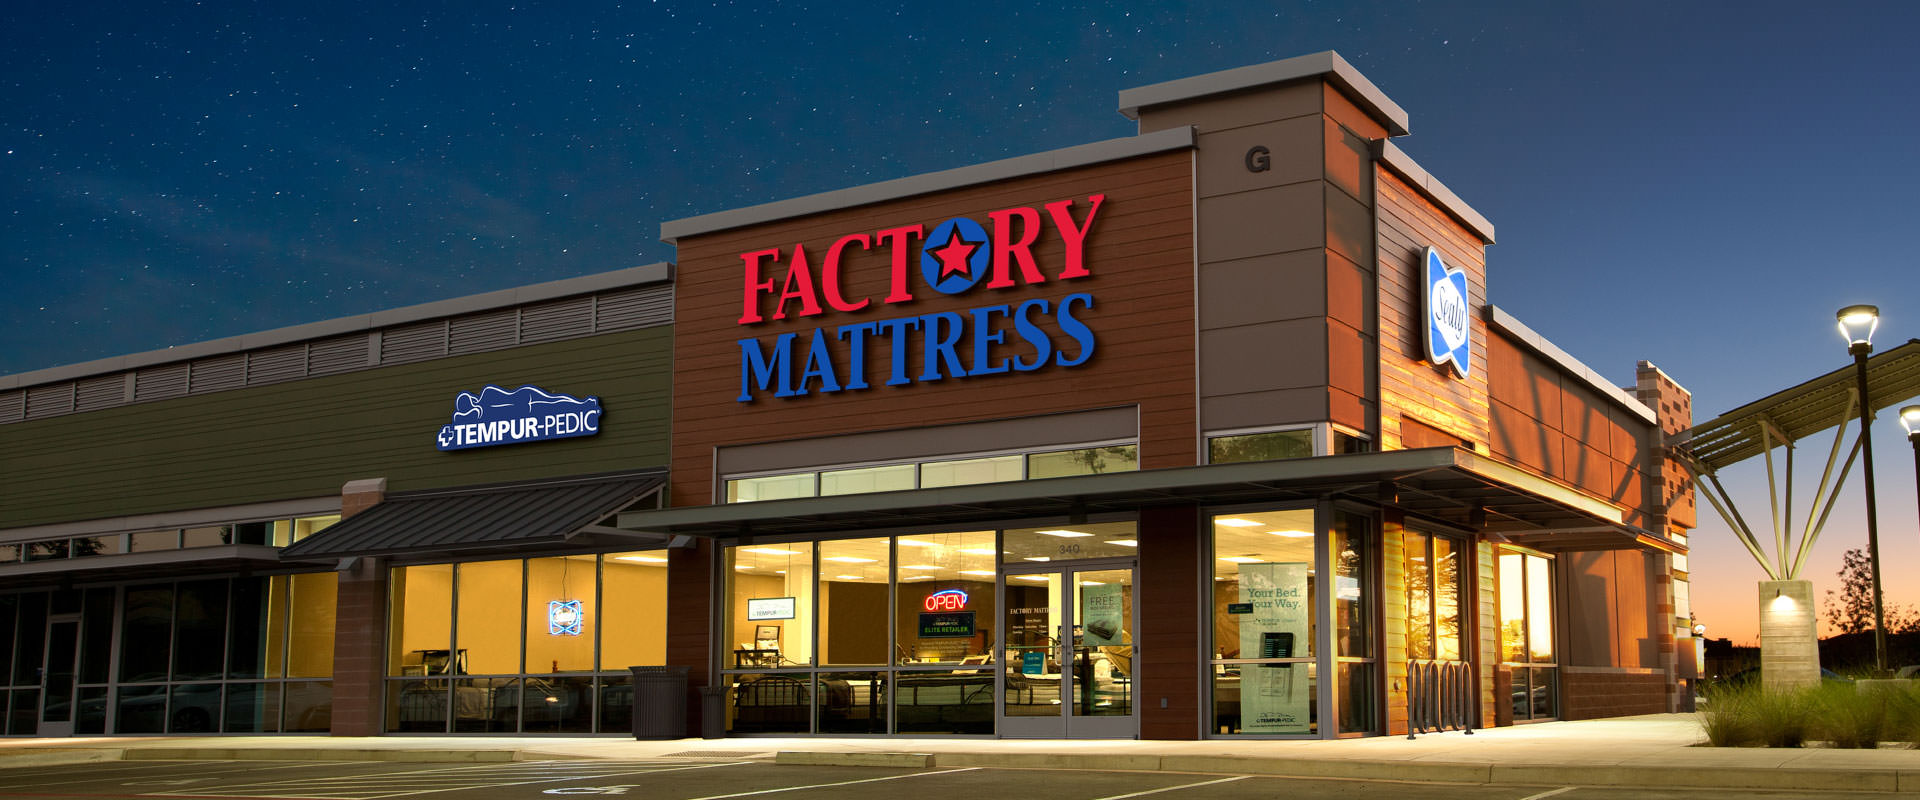 sealy mattress factory paterson nj